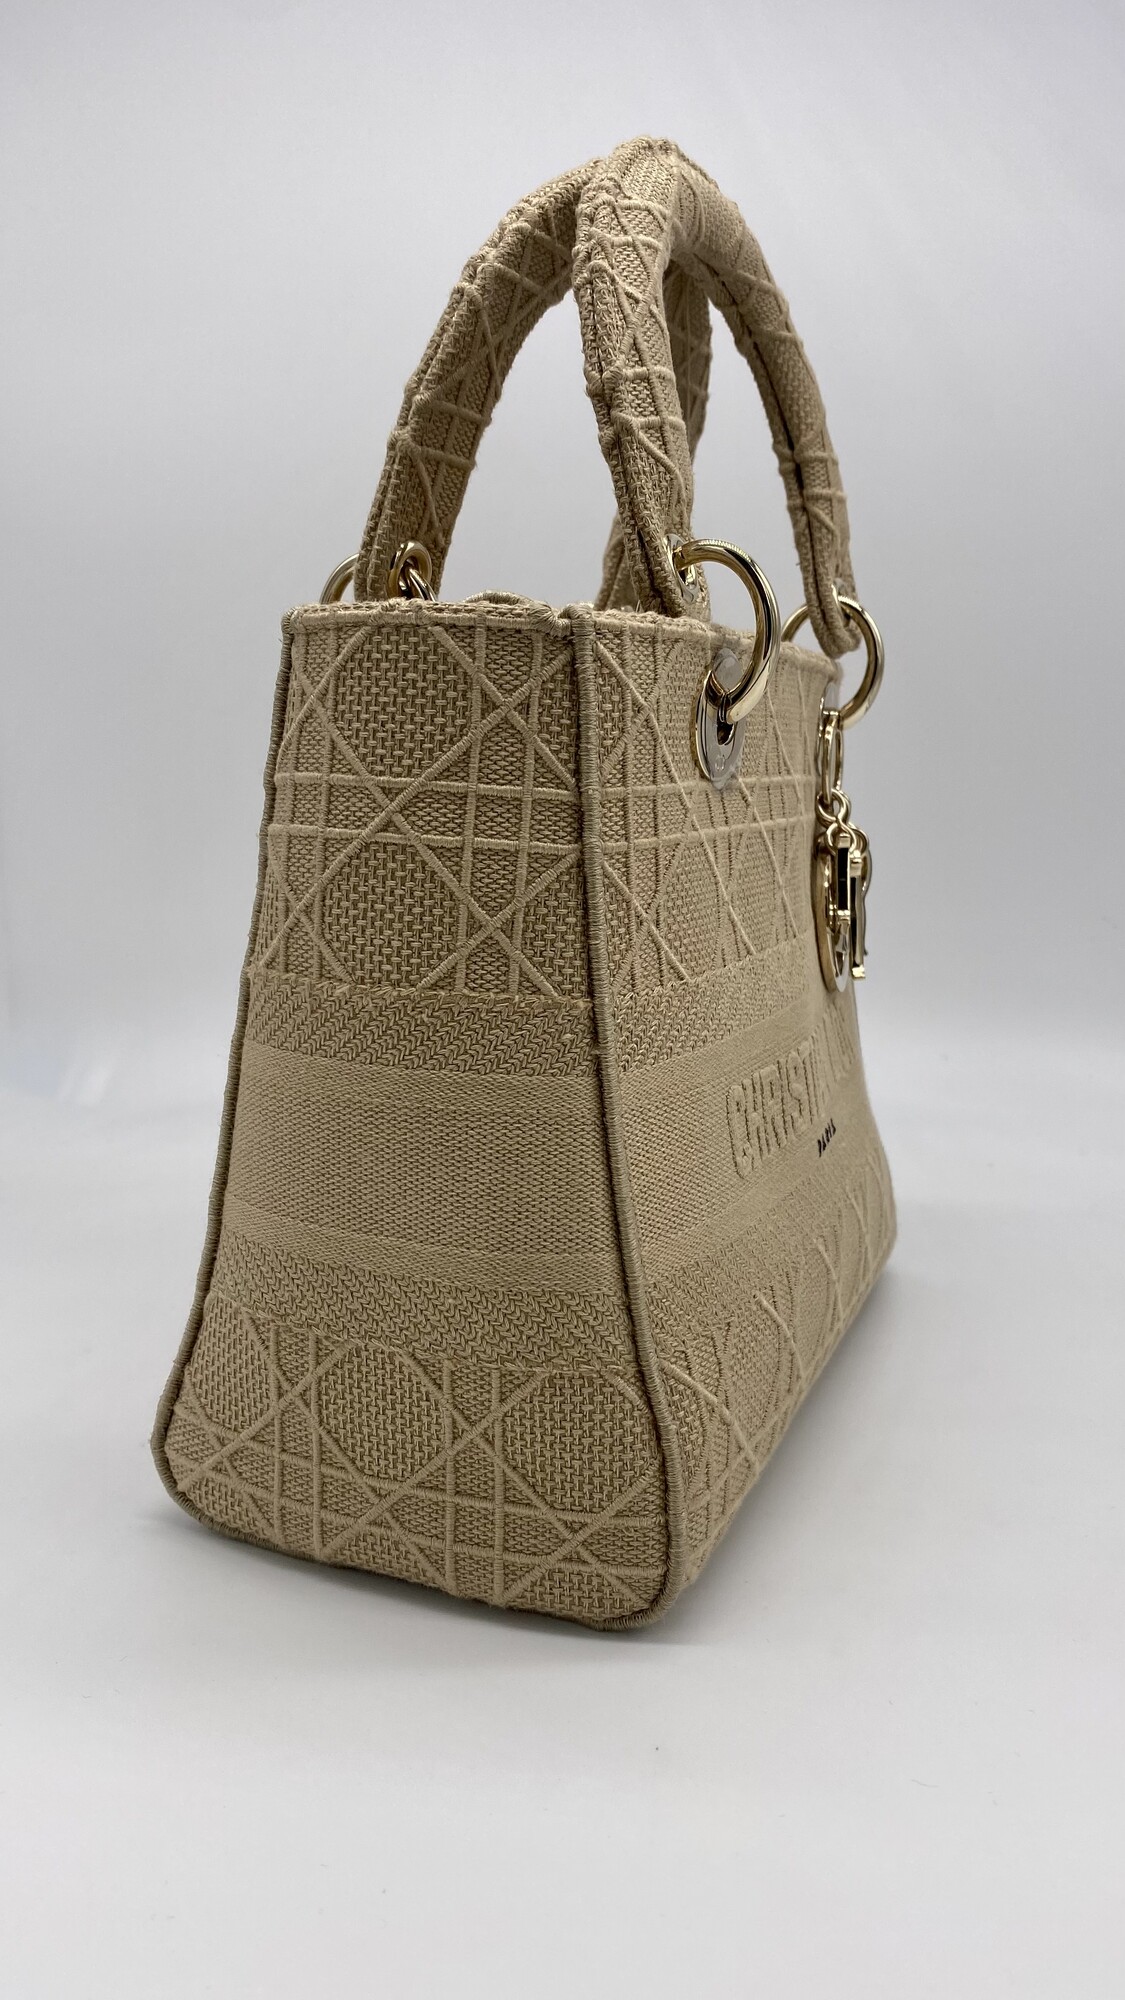 Christian Dior Lady D-Lite Bag